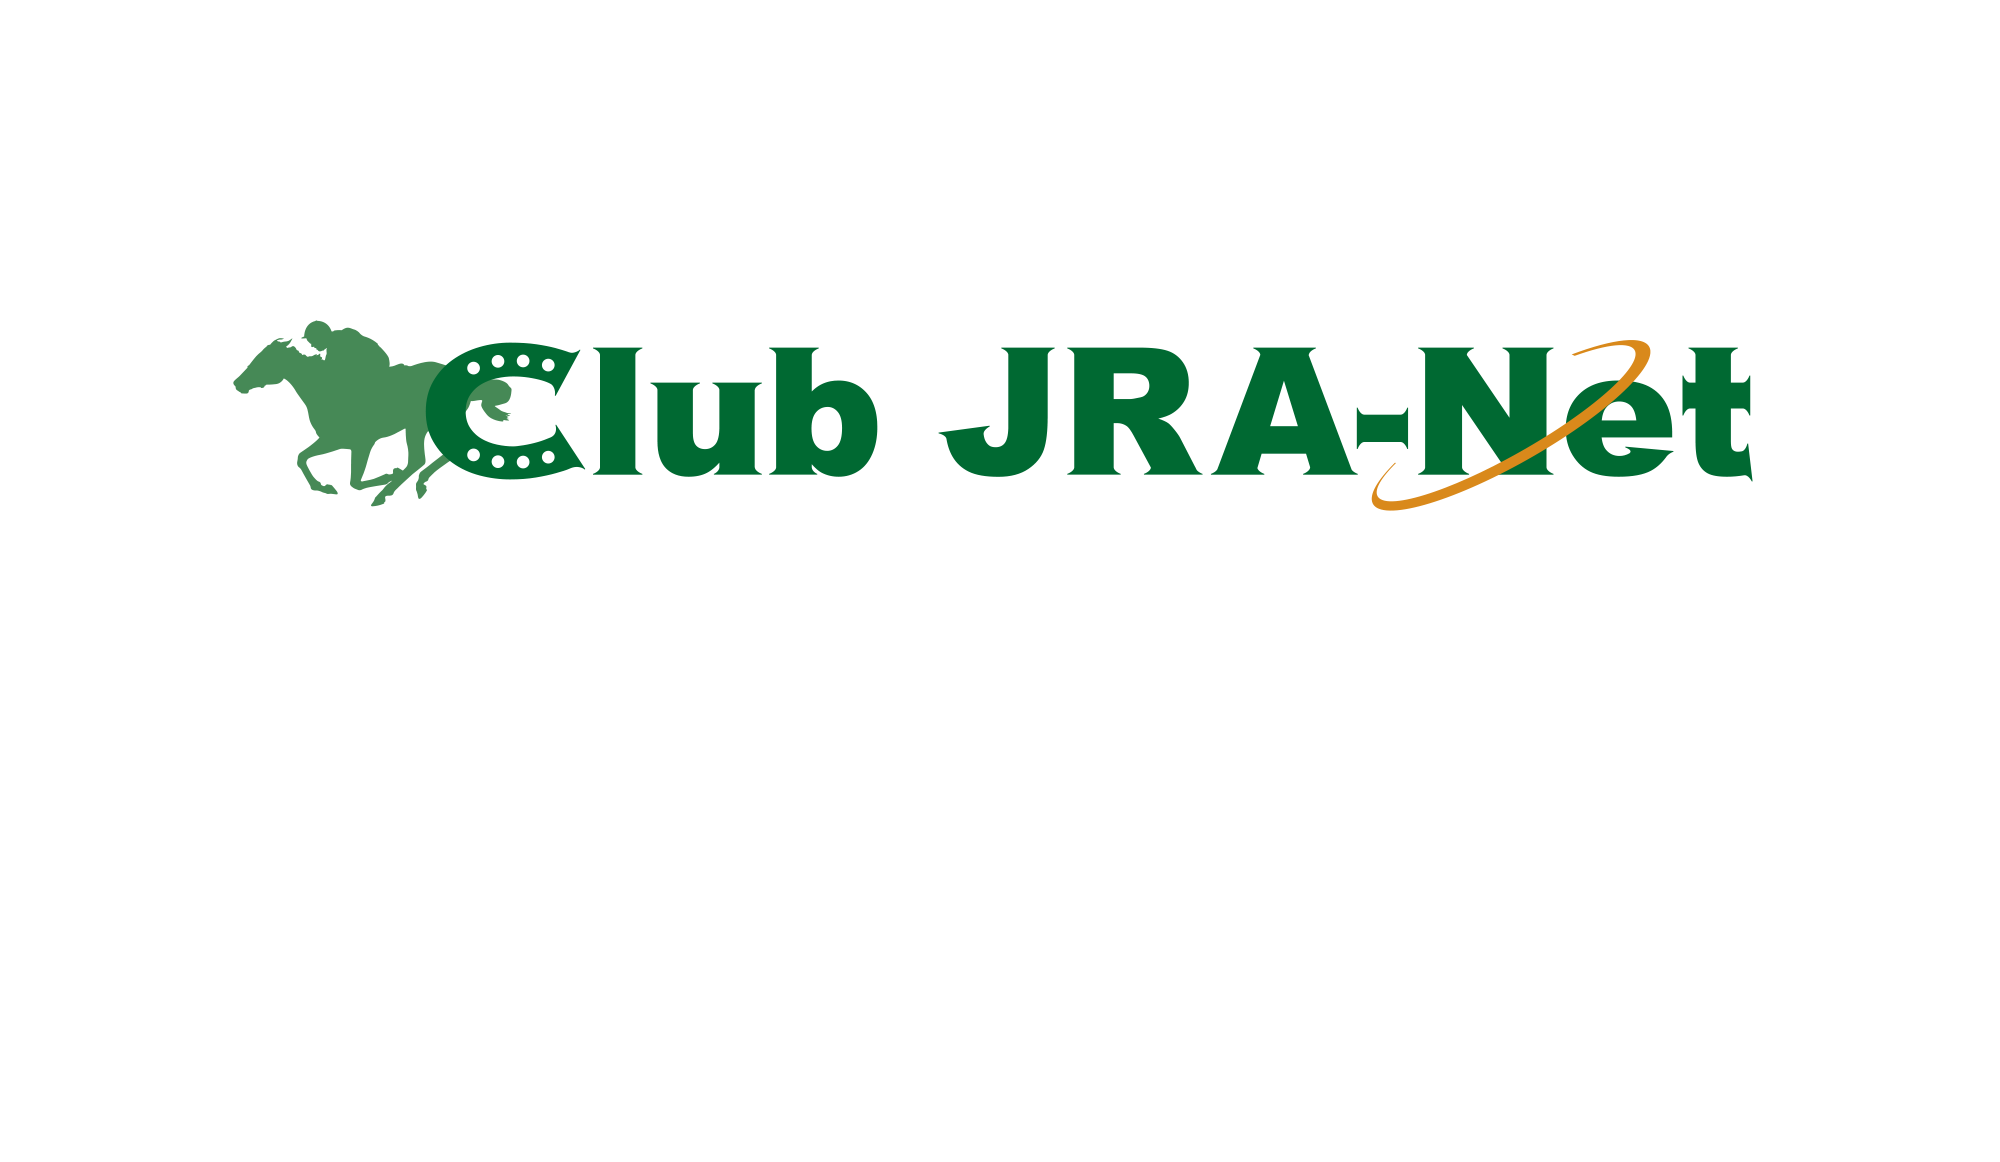 Club JRA-Netとは？JRA電話・インターネット投票会員をサポートします！登録・利用 無料！！